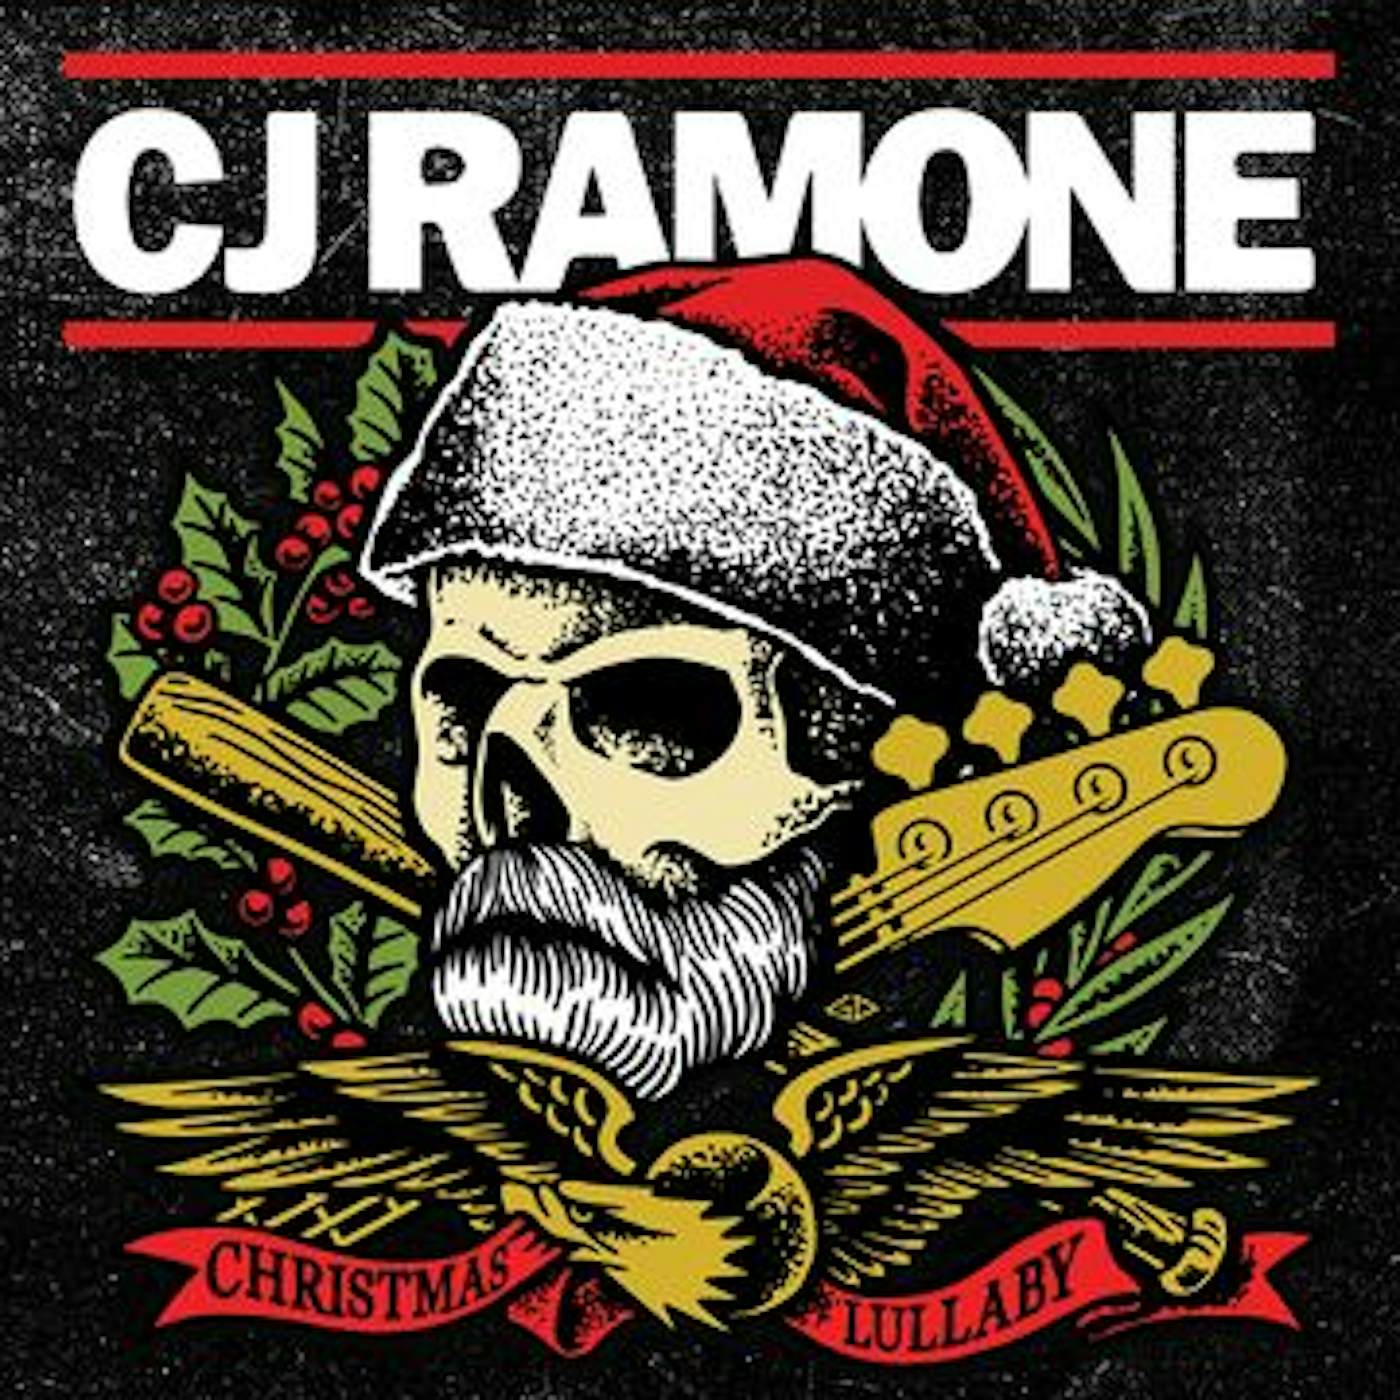 CJ Ramone Christmas Lullabye Vinyl Record